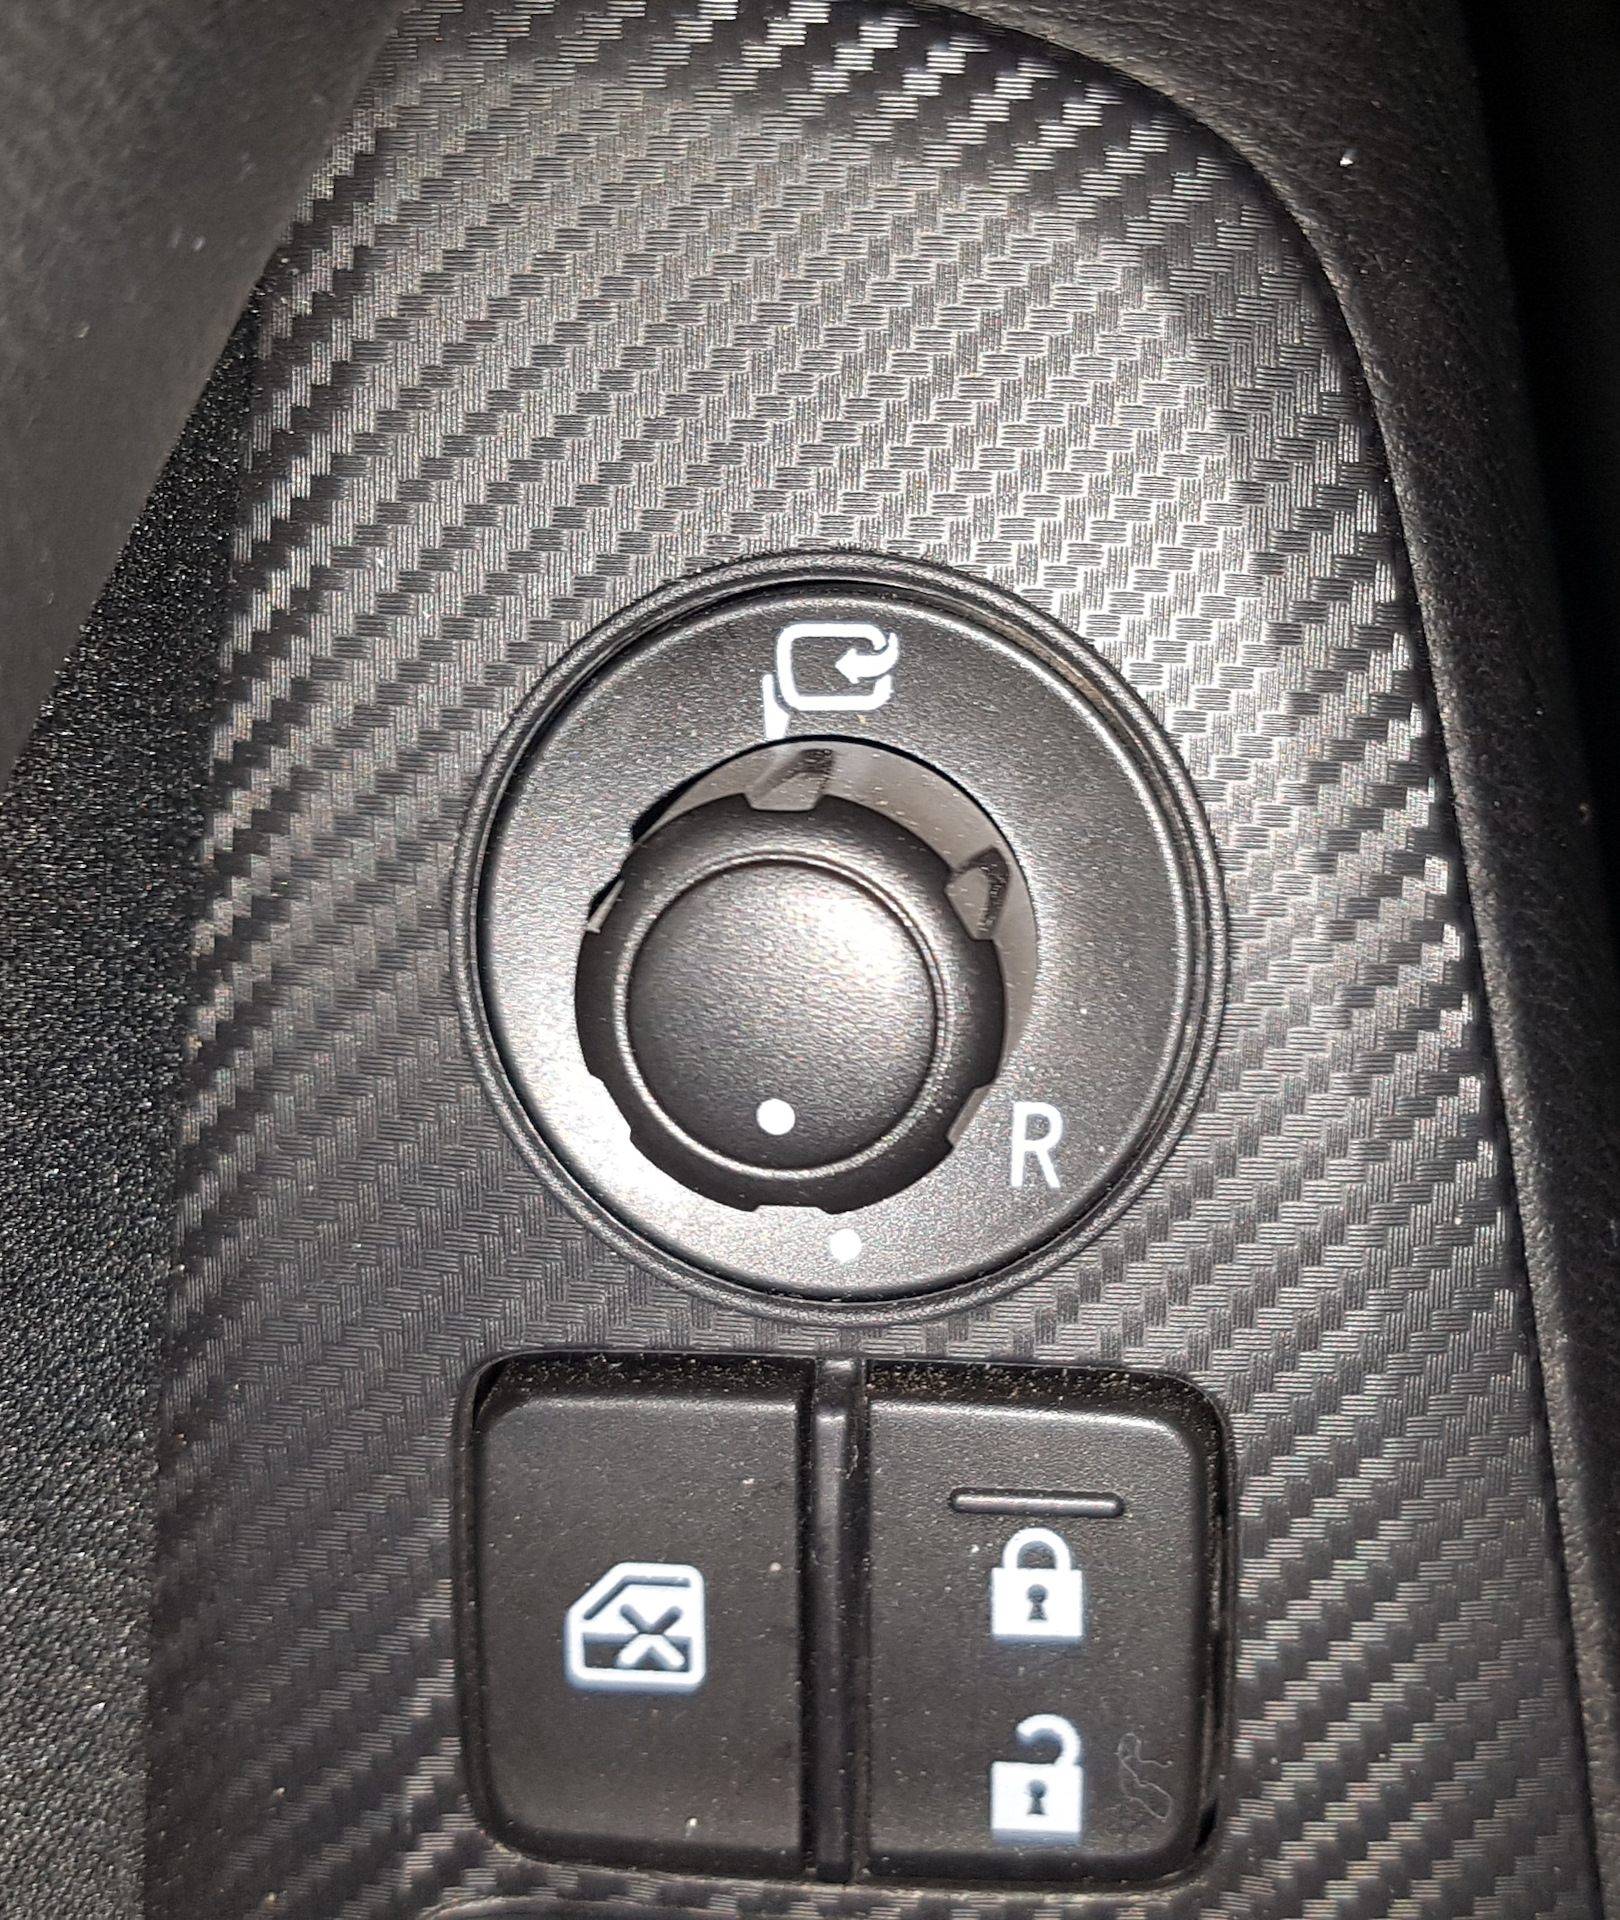 Складывание зеркал мазда сх 5. Кнопка складывания зеркал Мазда 6. Mazda CX 5 складывание зеркал кнопка. Кнопка складывания зеркал Мазда сх5 2014. Кнопка электроскладывание зеркал Мазда 3.